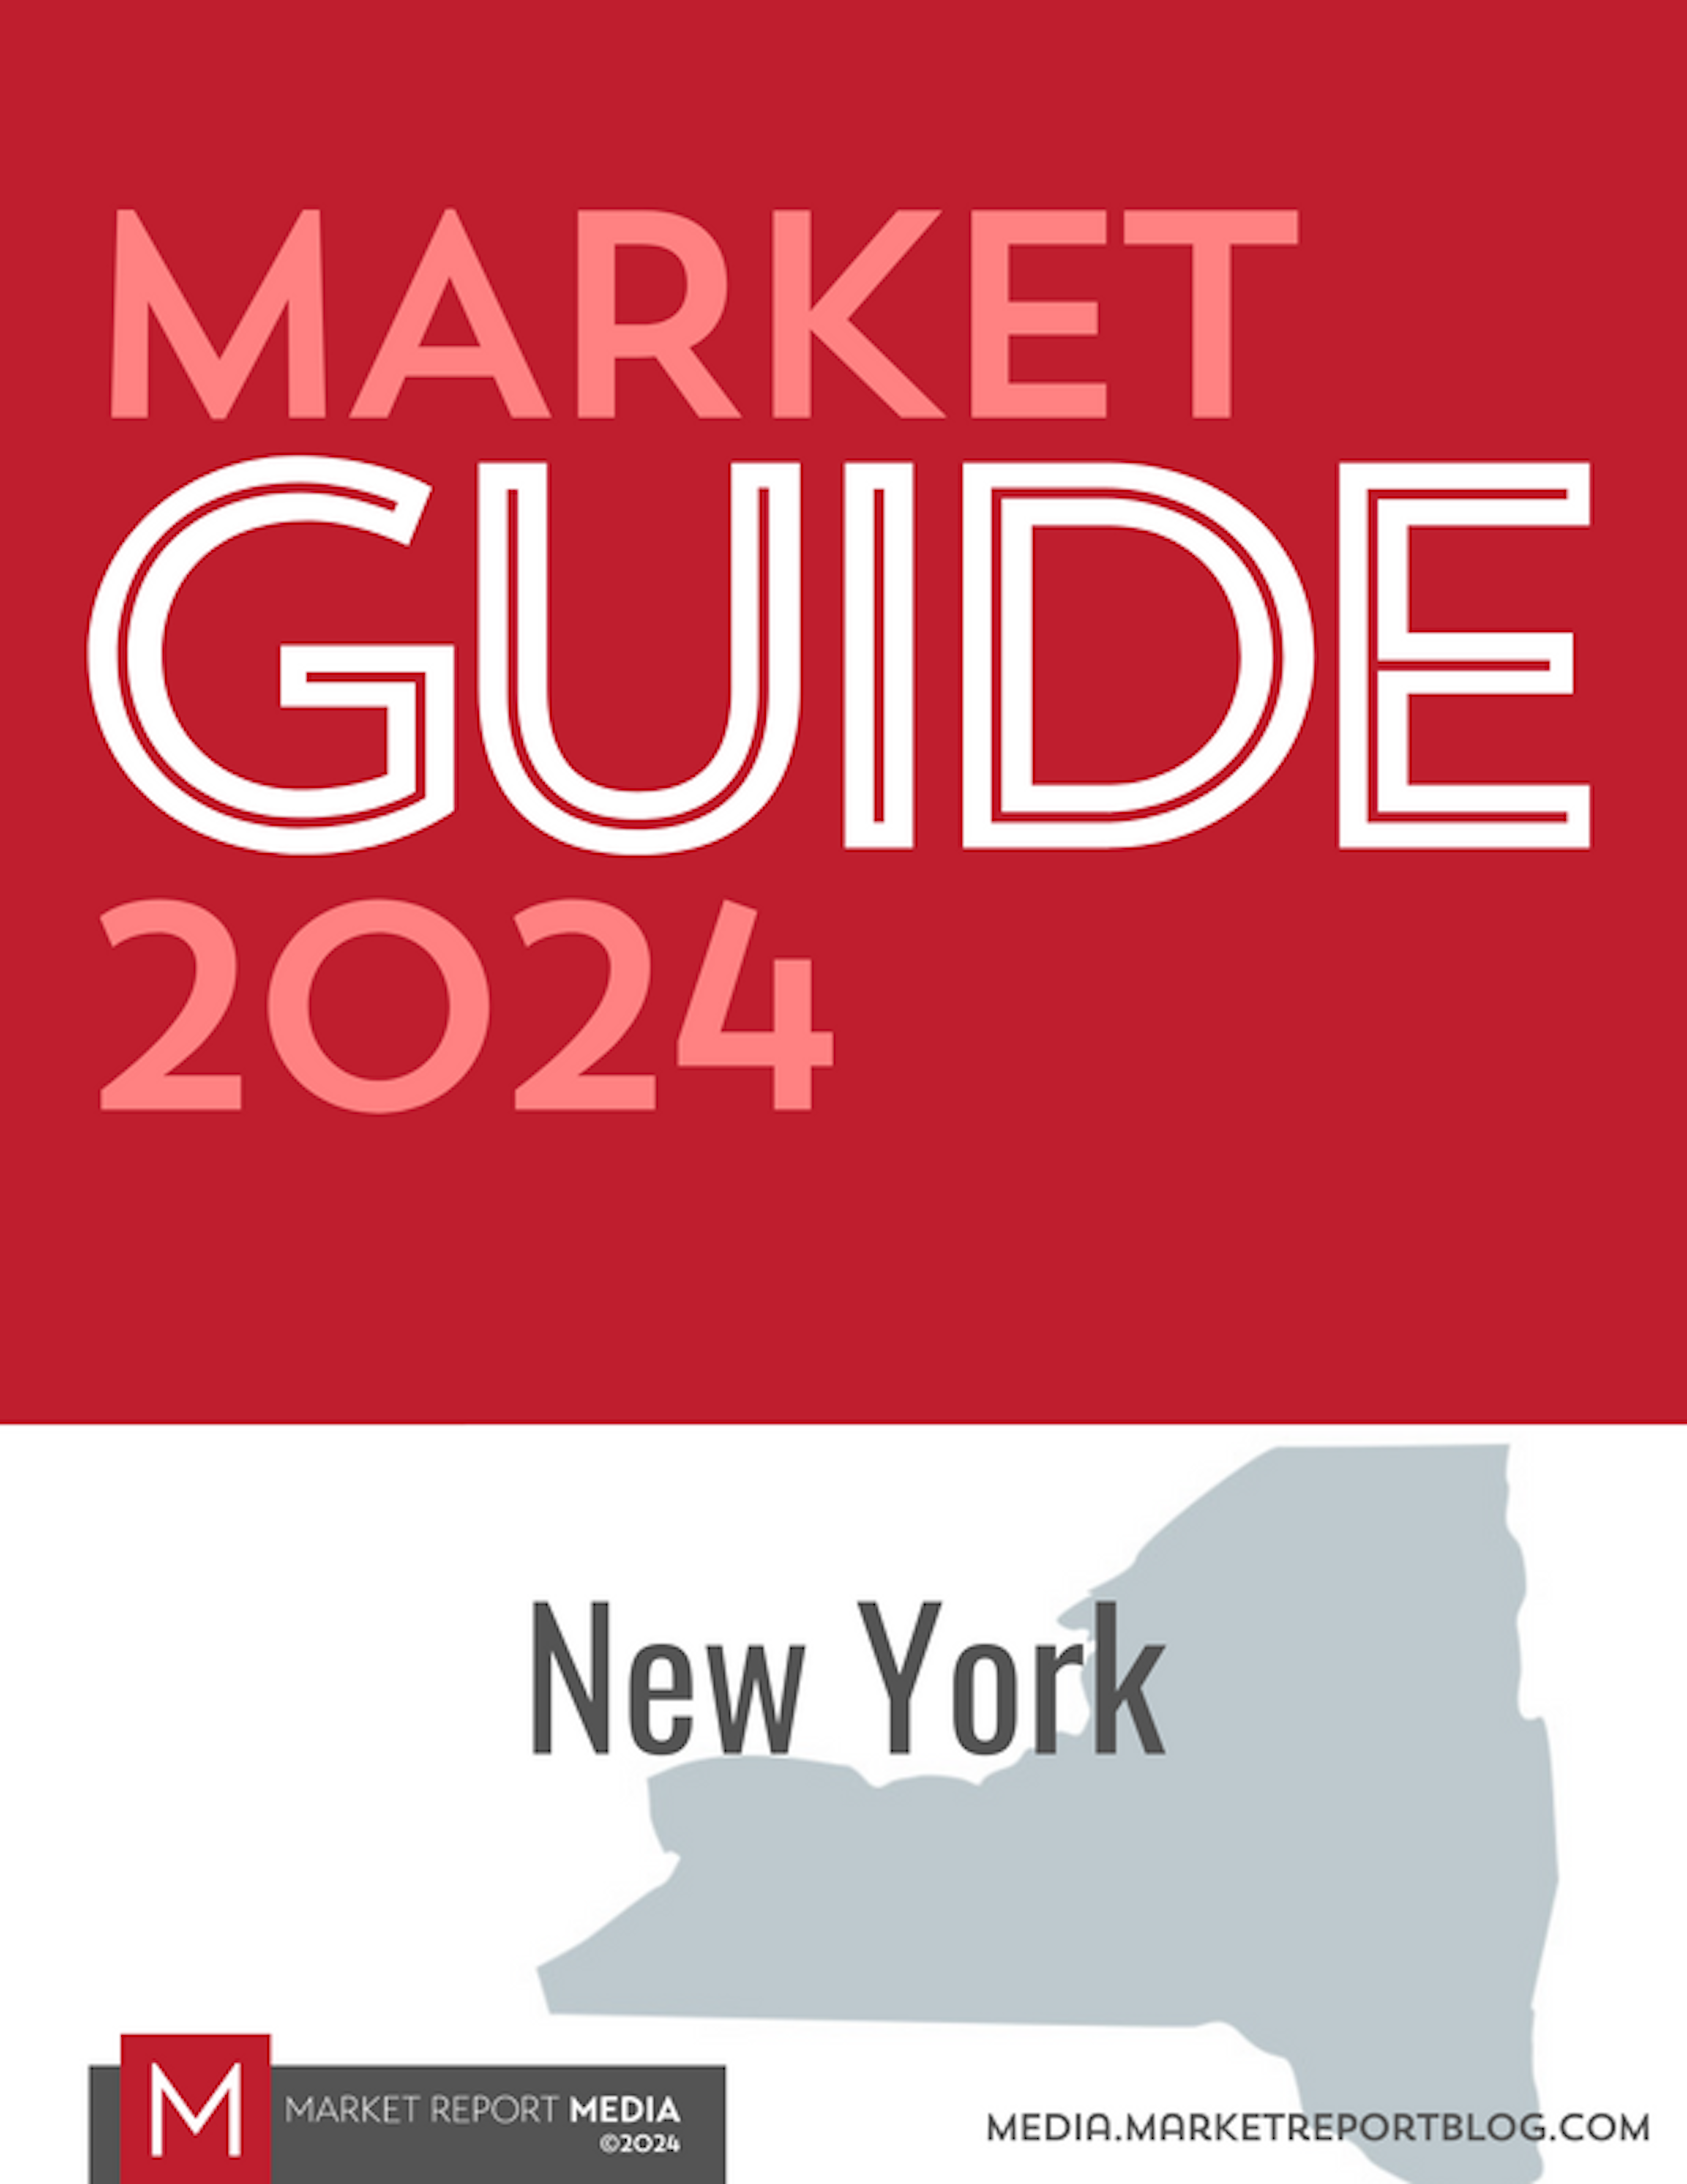 Market Guide 2024 - New York